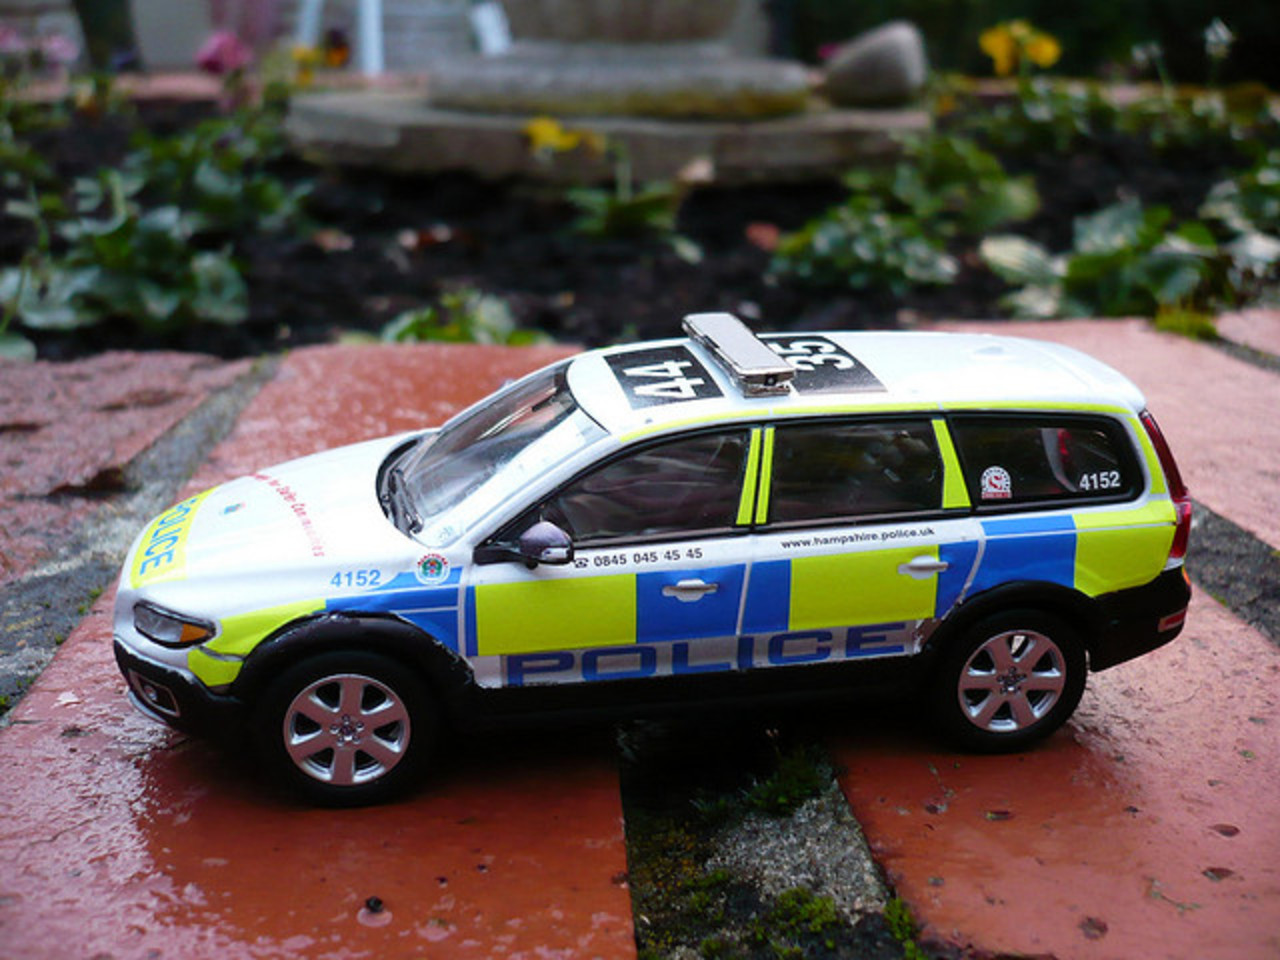 Hampshire Police Volvo XC70 Response Car | Flickr - Photo Sharing!